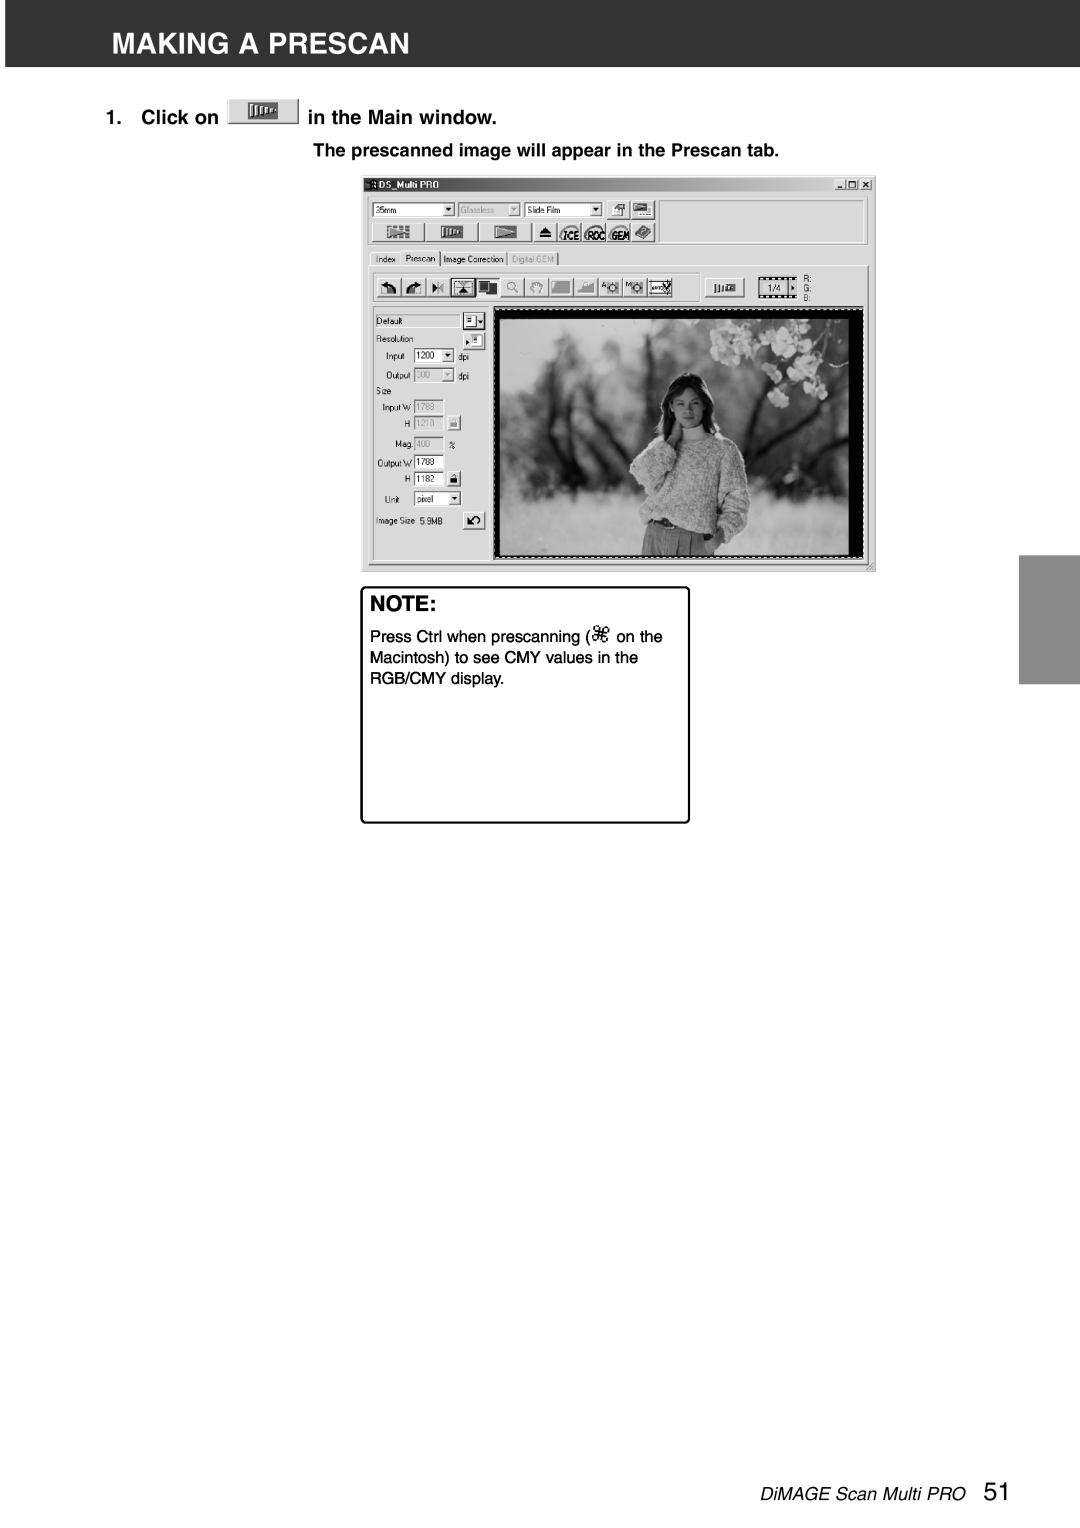 Konica Minolta instruction manual Making A Prescan, Click on in the Main window, DiMAGE Scan Multi PRO 